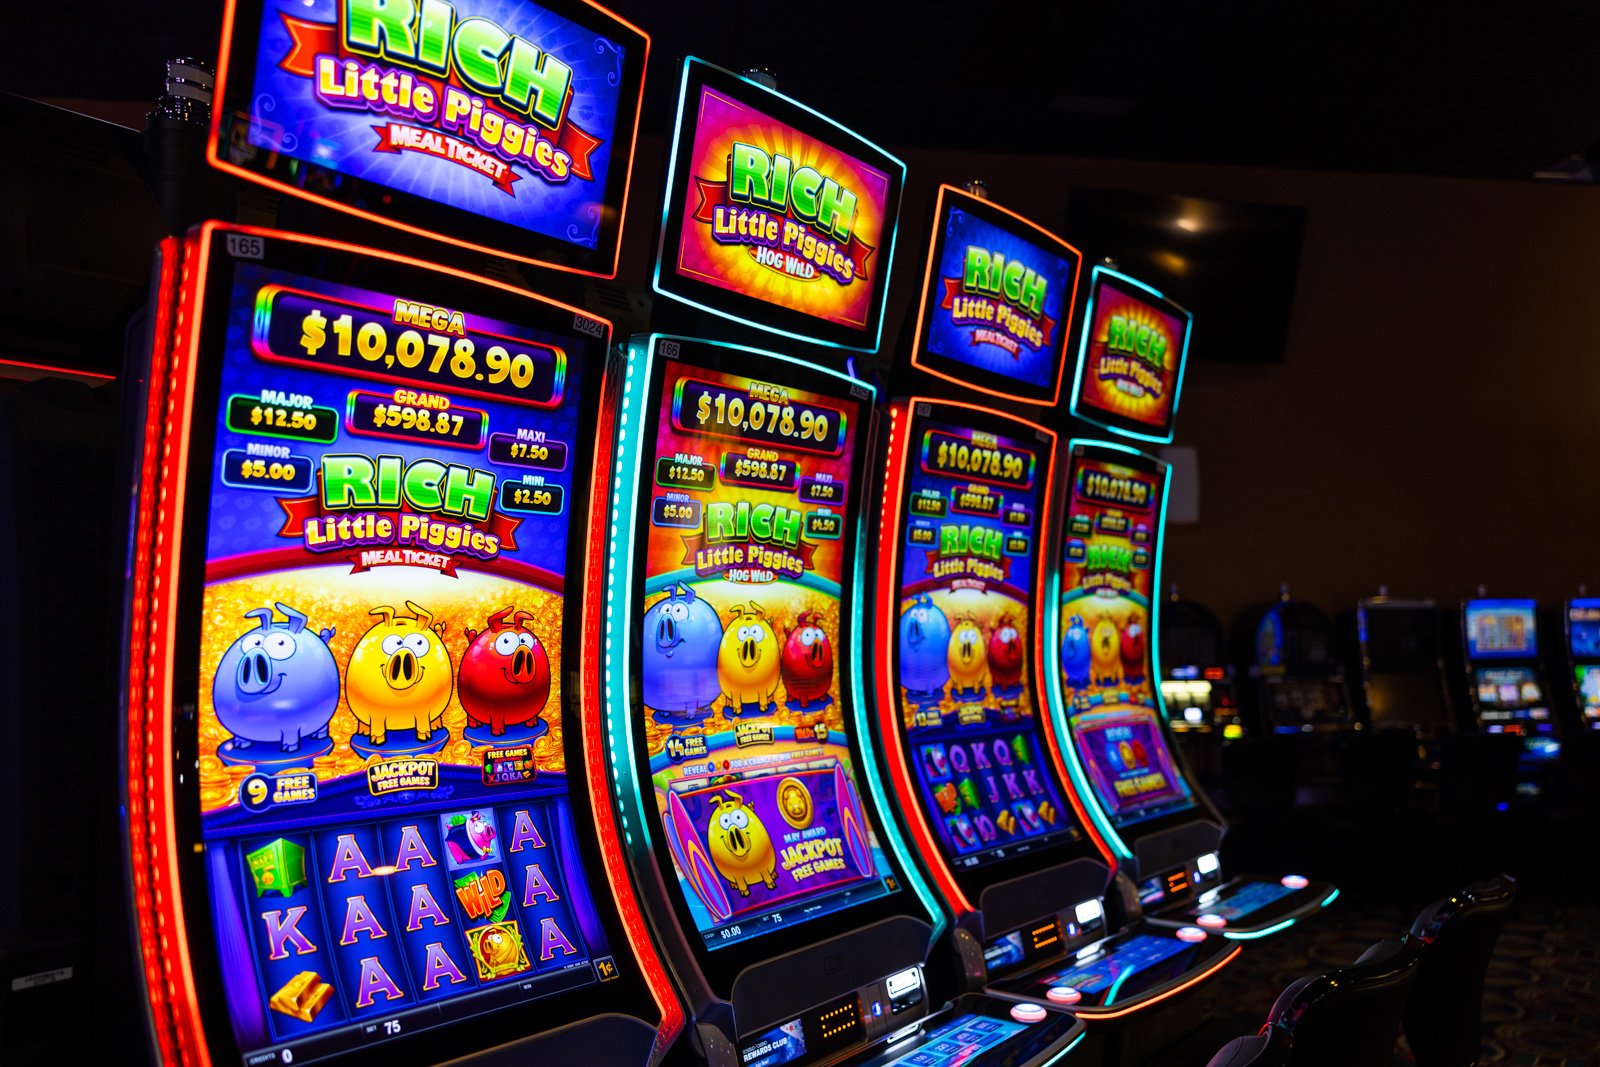 rosebud-casino-gaming-floor-slot-machines-near-valentine-nebraska-5.jpg